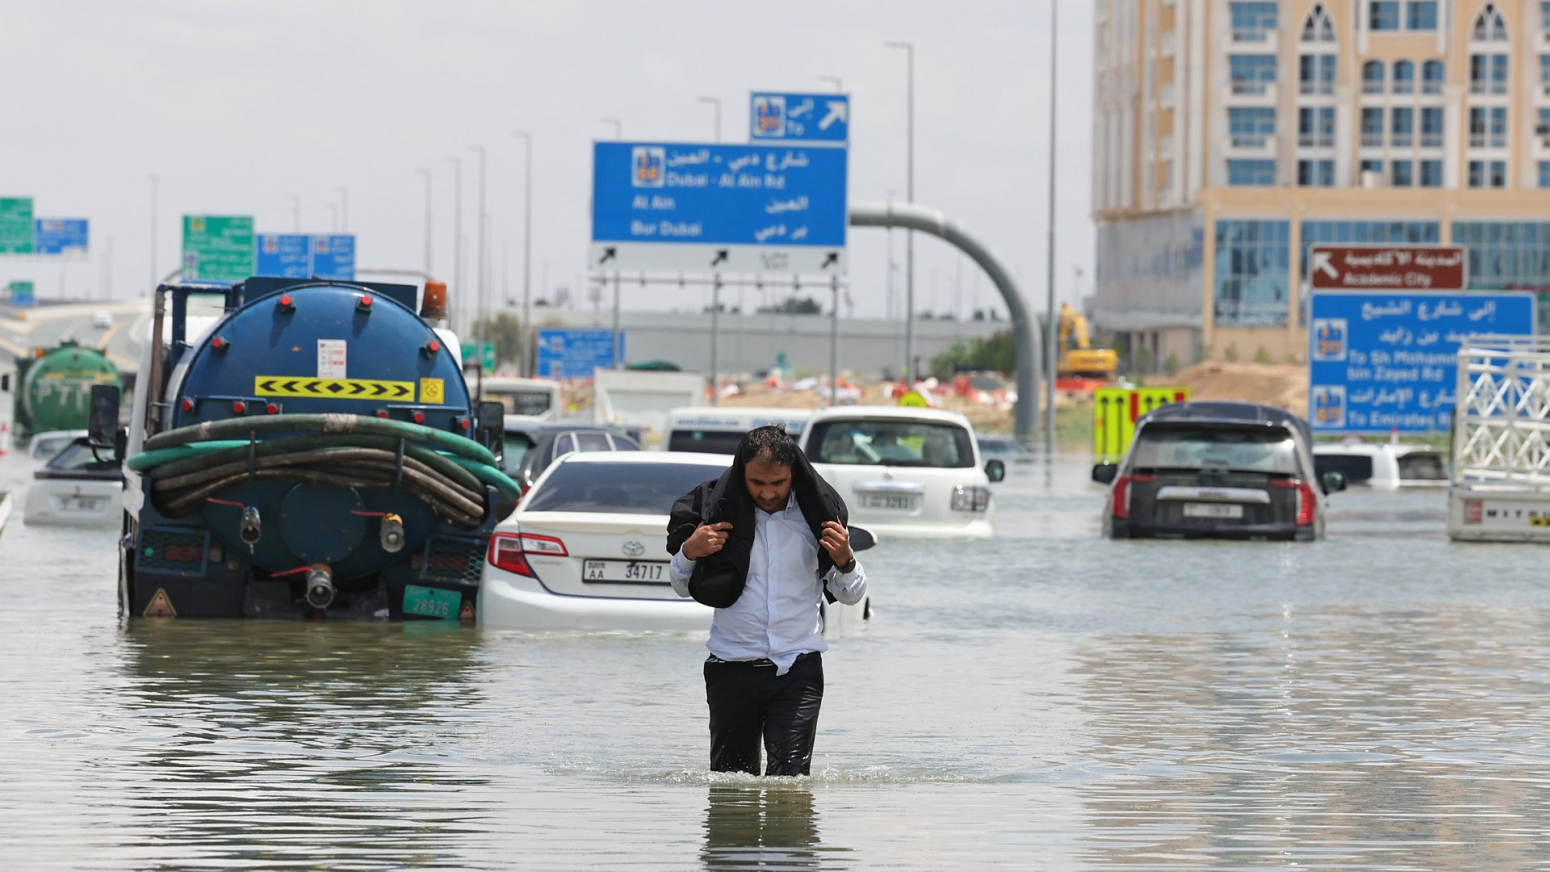 Dubai airport runway submerged in flash floods